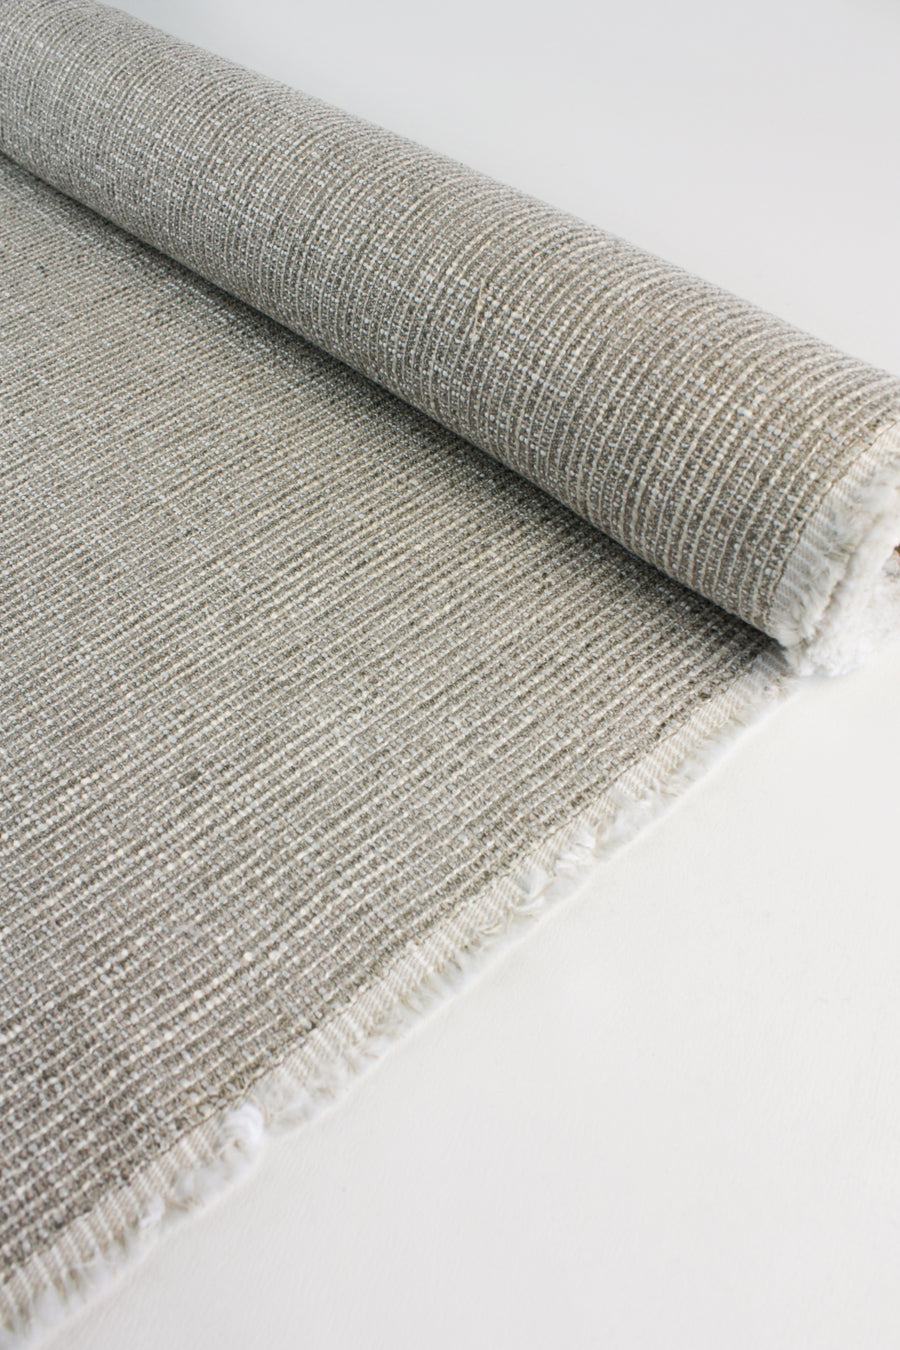 Whitford - Italian Bouclé Tweed | Sand